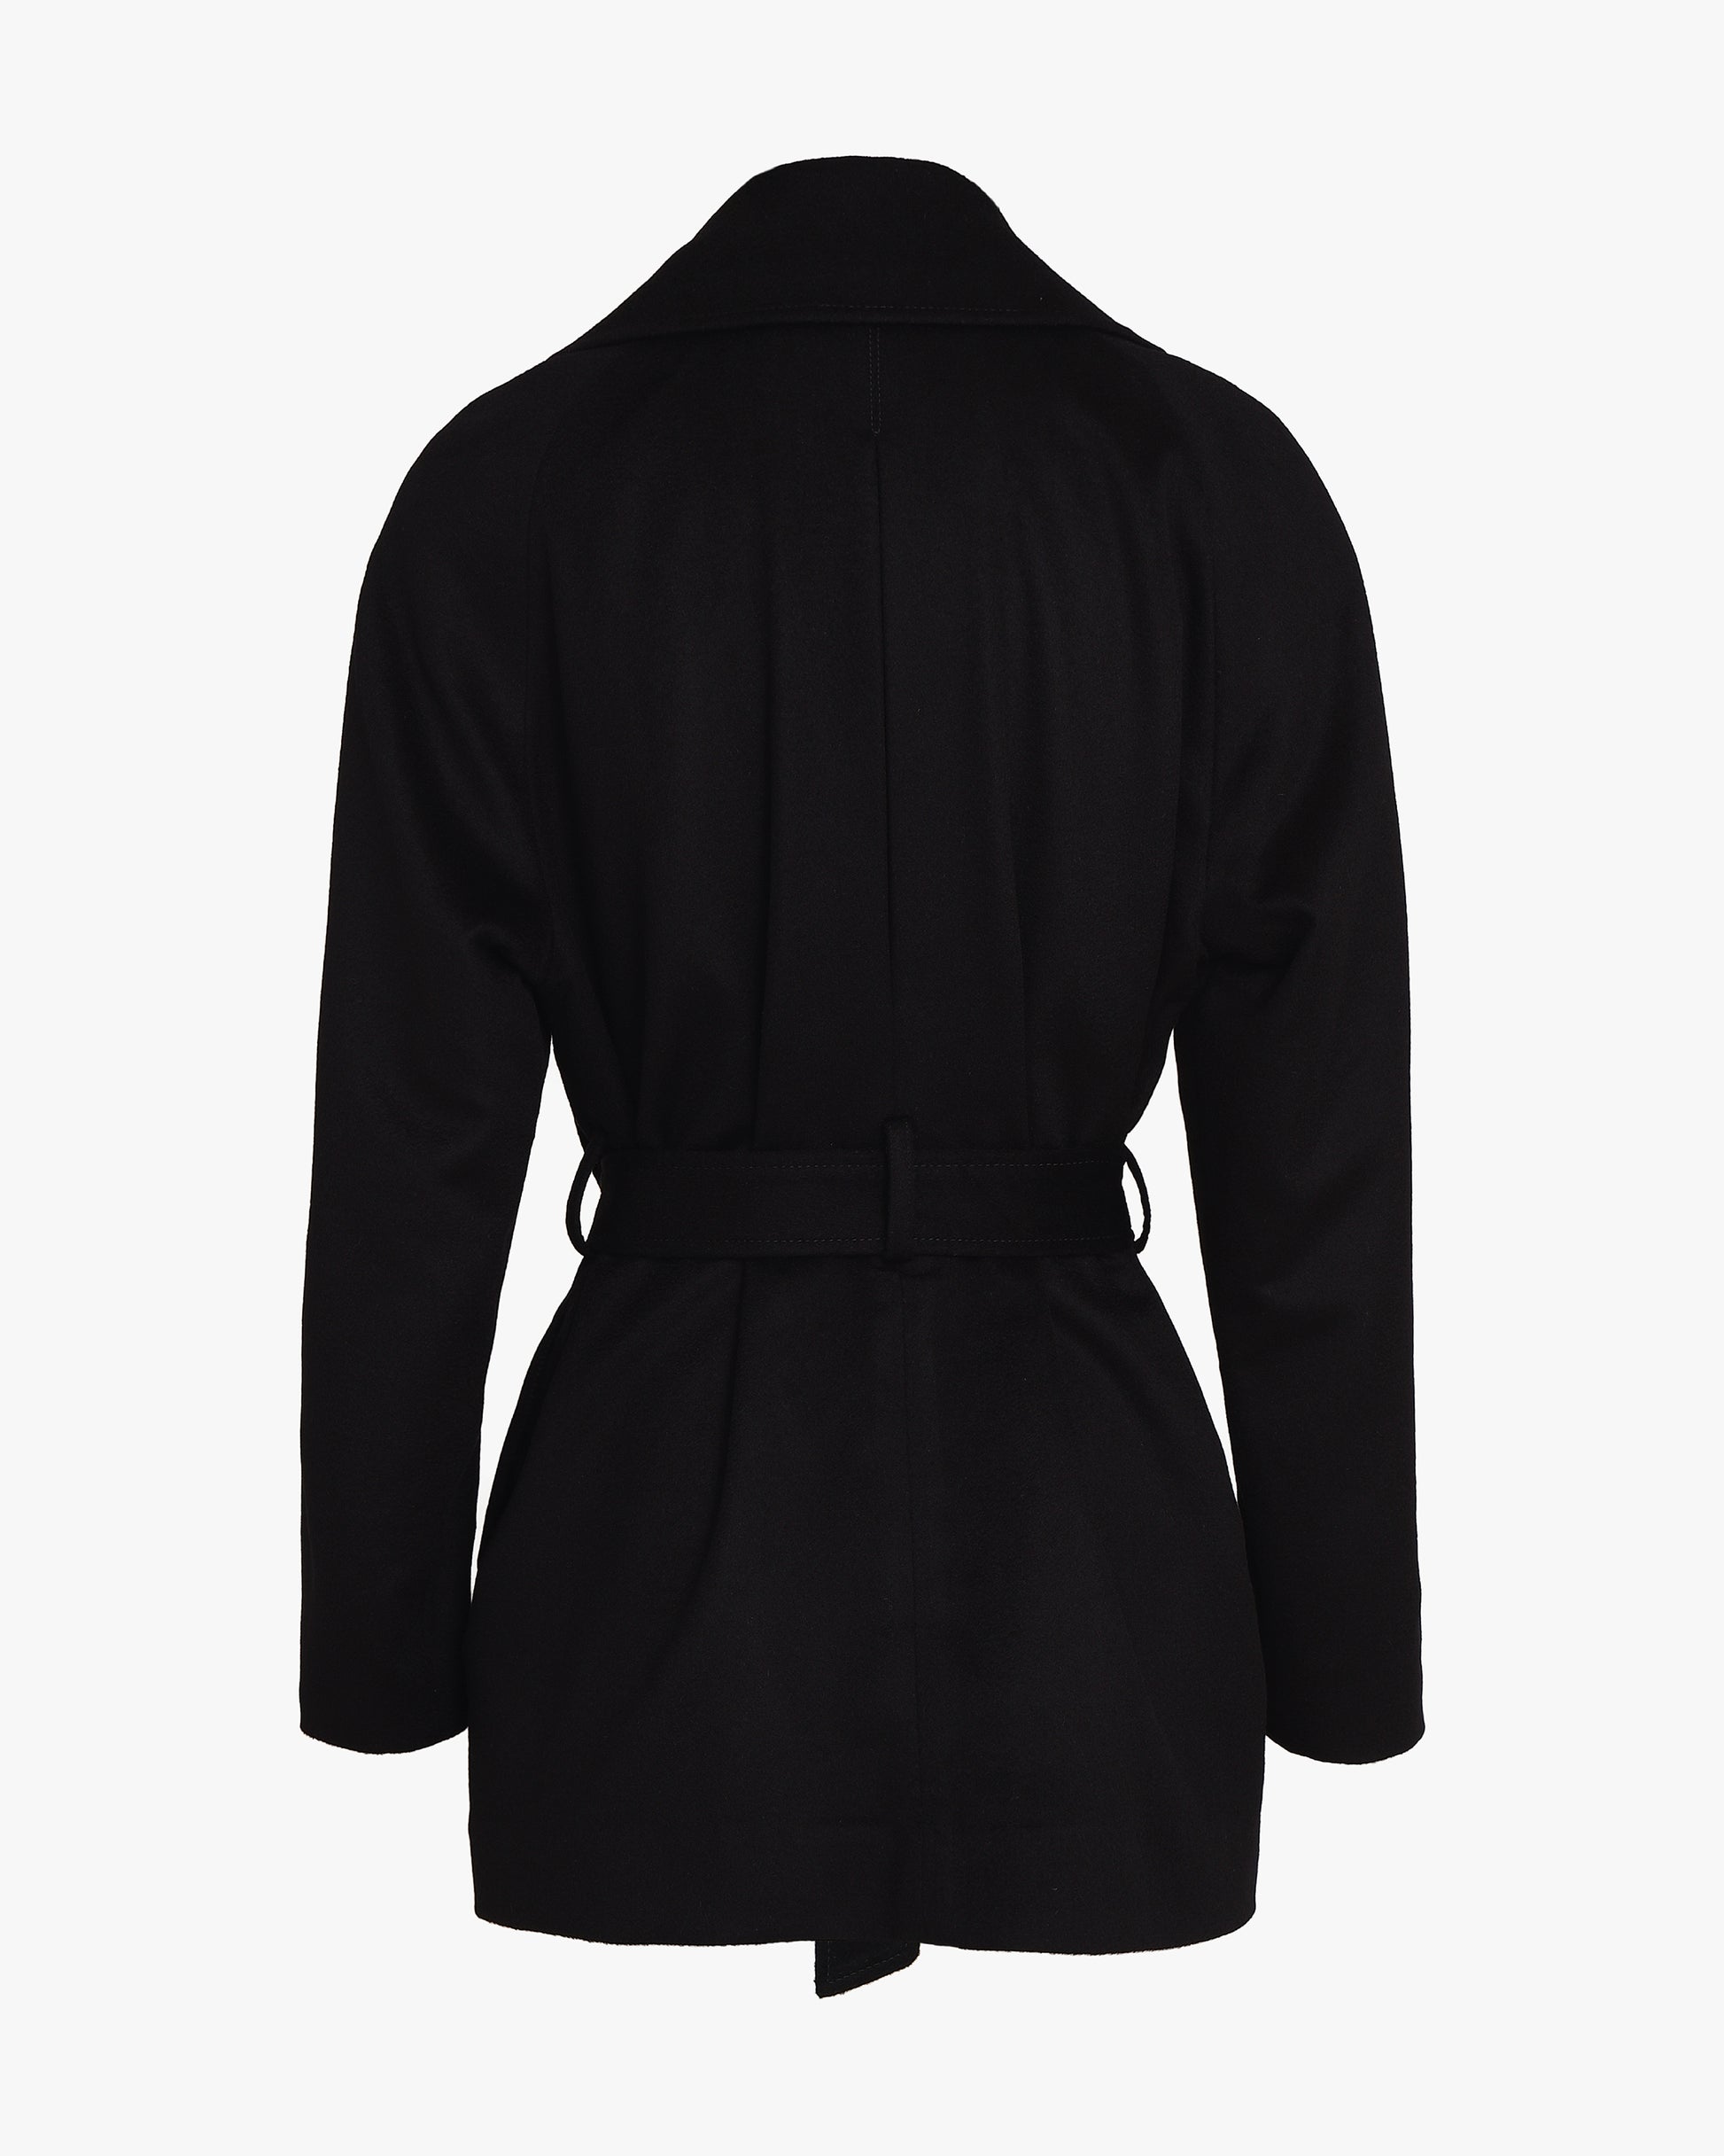 Issue Twelve Emma Coat in Black Wool Cashmere